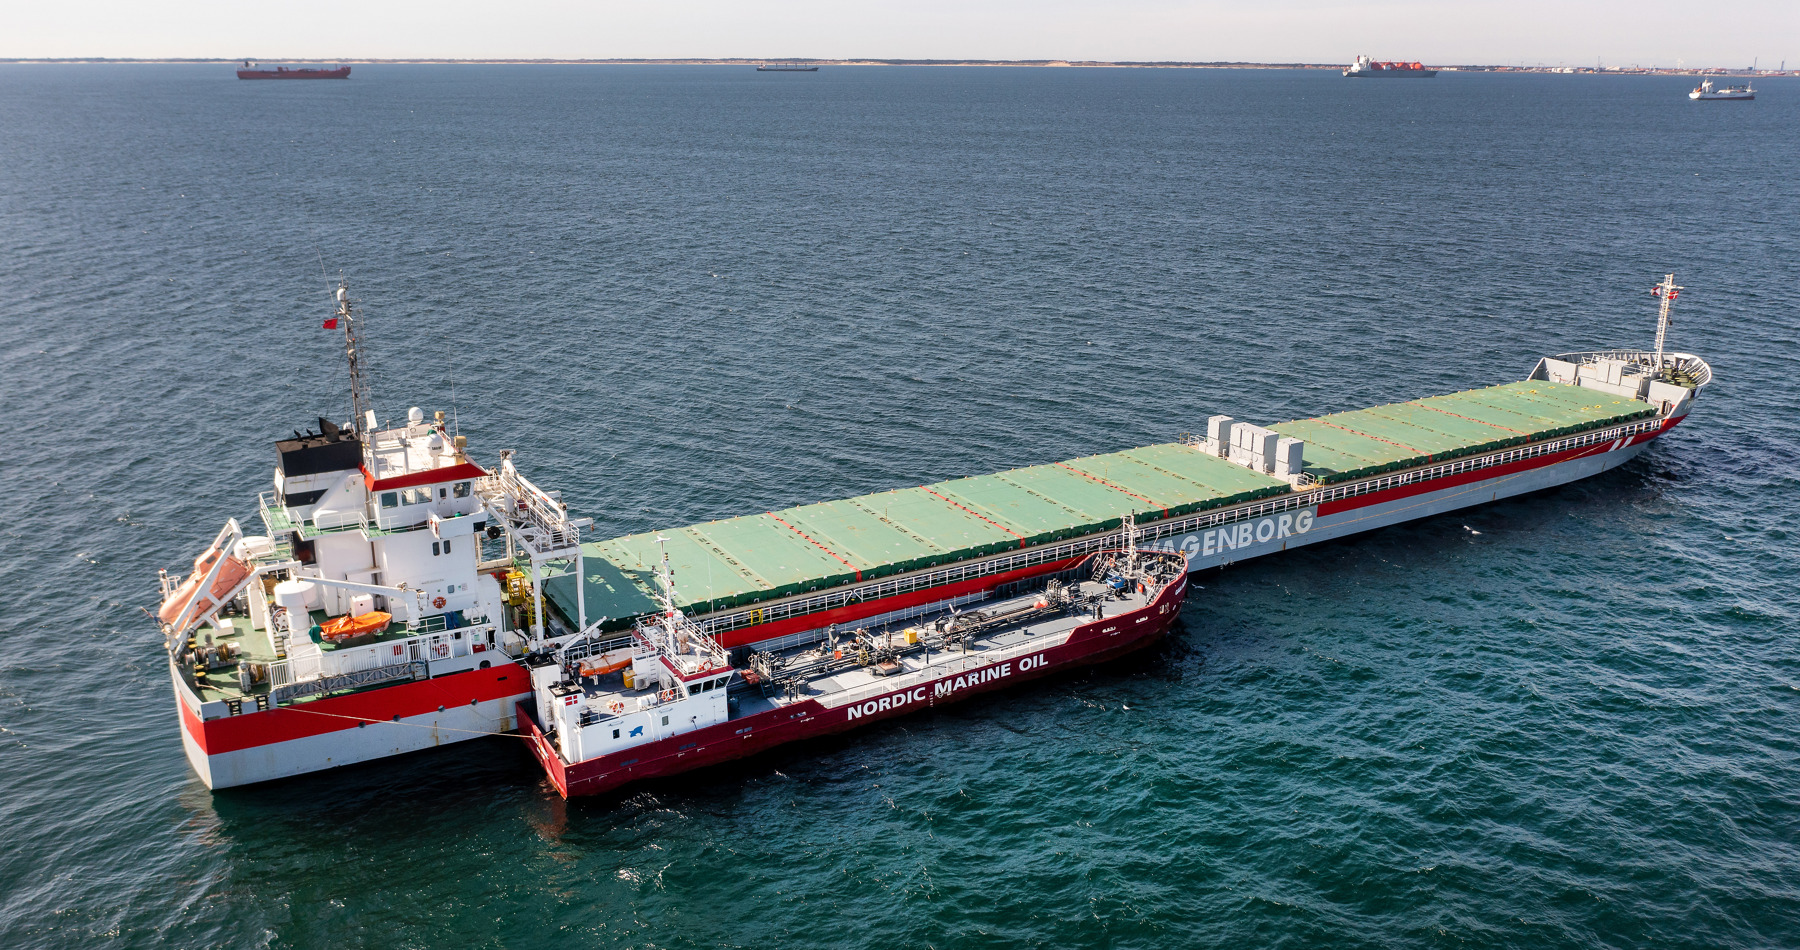 First Transatlantic voyage sailing on biofuels reduces 68% GHG emissions